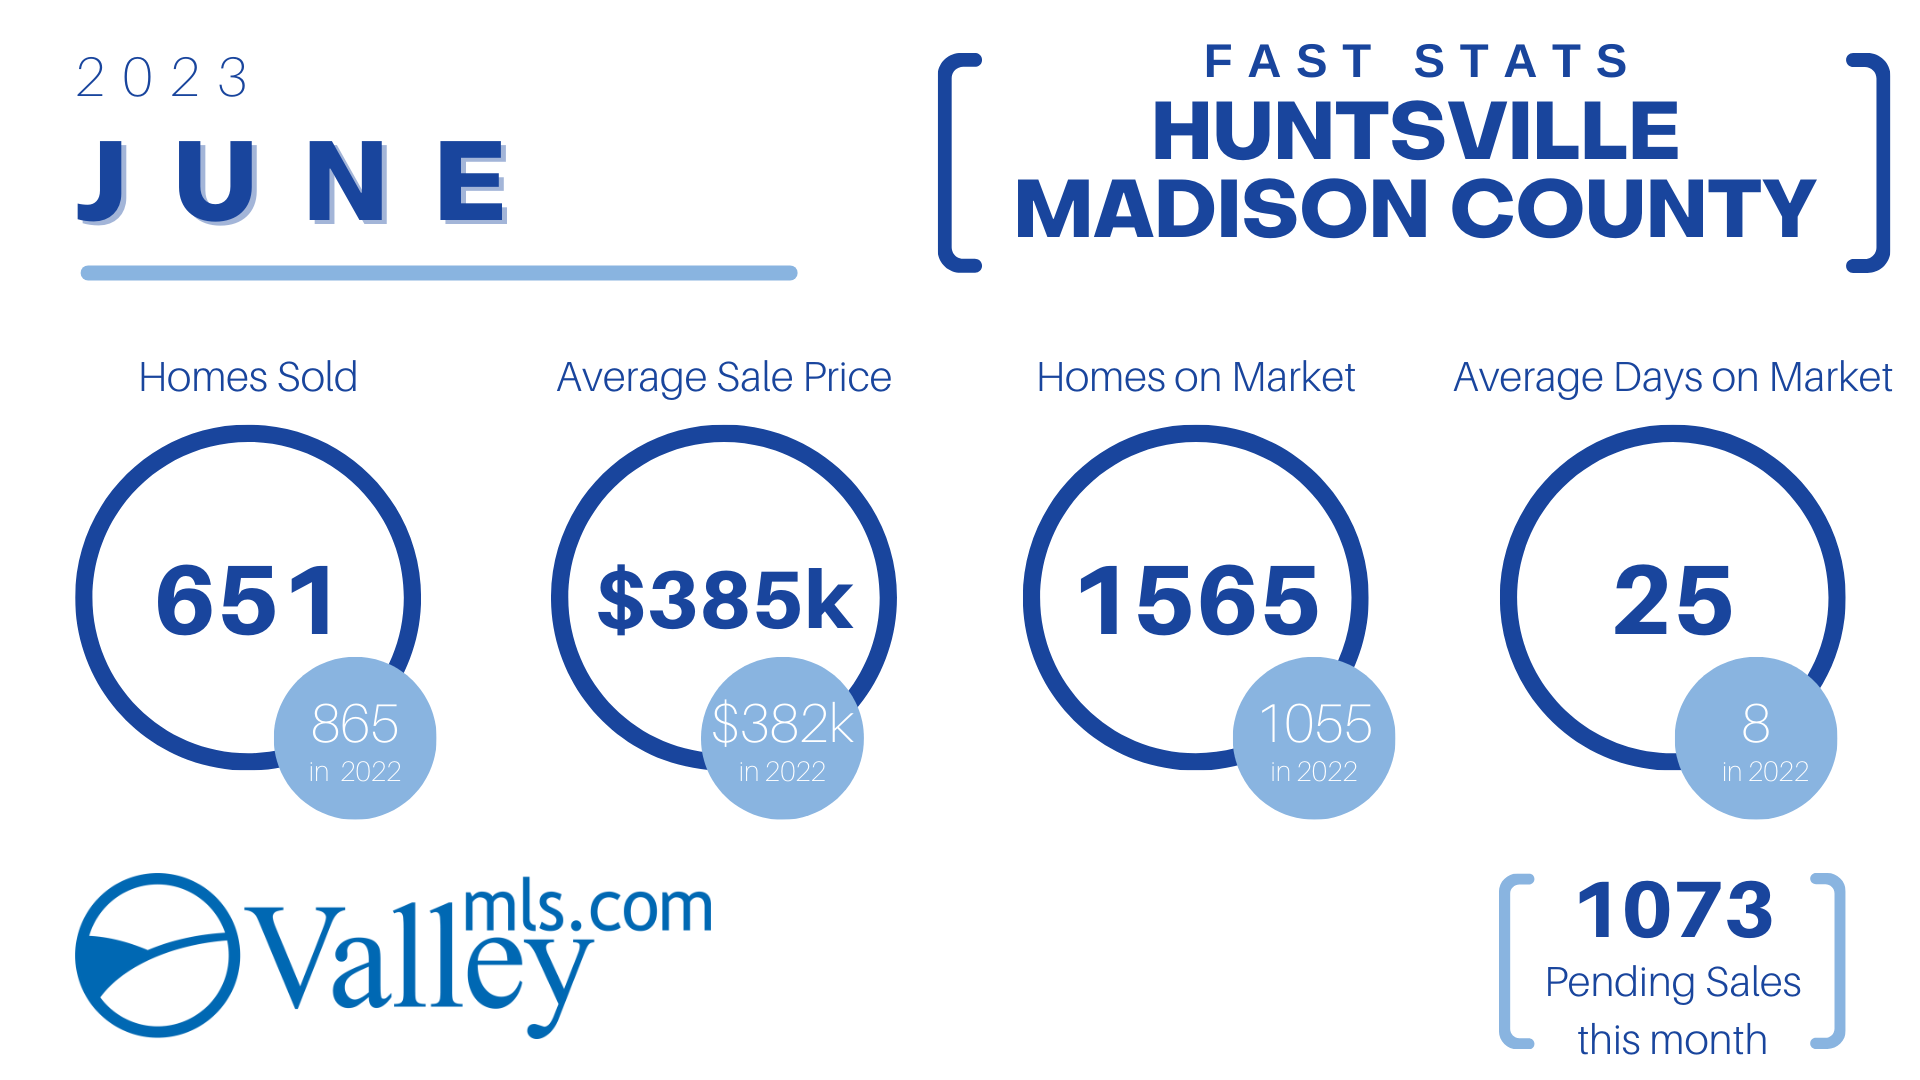 HUNTSVILLE_Madison County Fast Stats